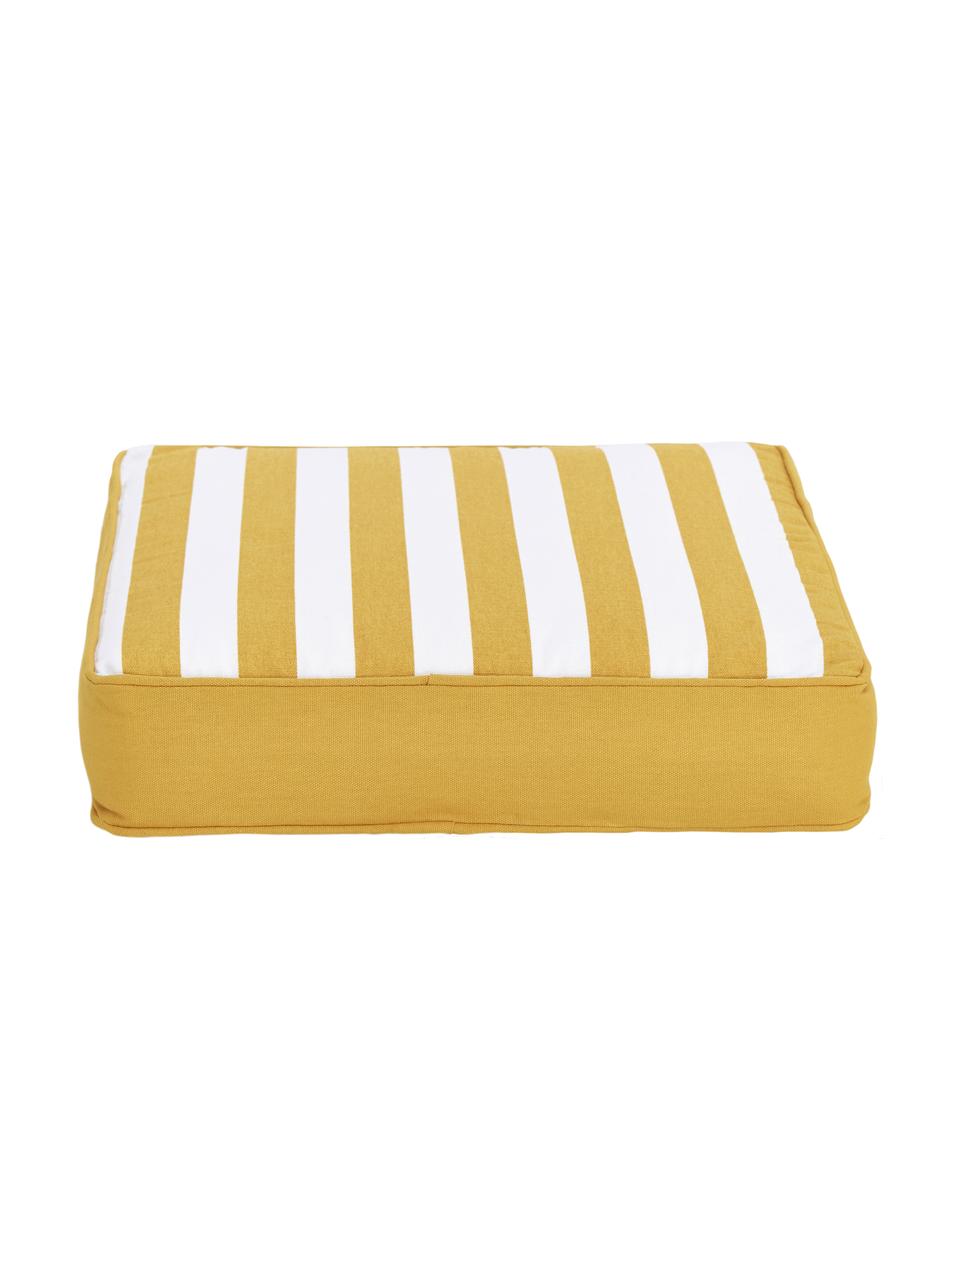 Cojín para silla alto a rayas Timon, Funda: 100% algodón, Amarillo y blanco estampado, An 40 x L 40 cm